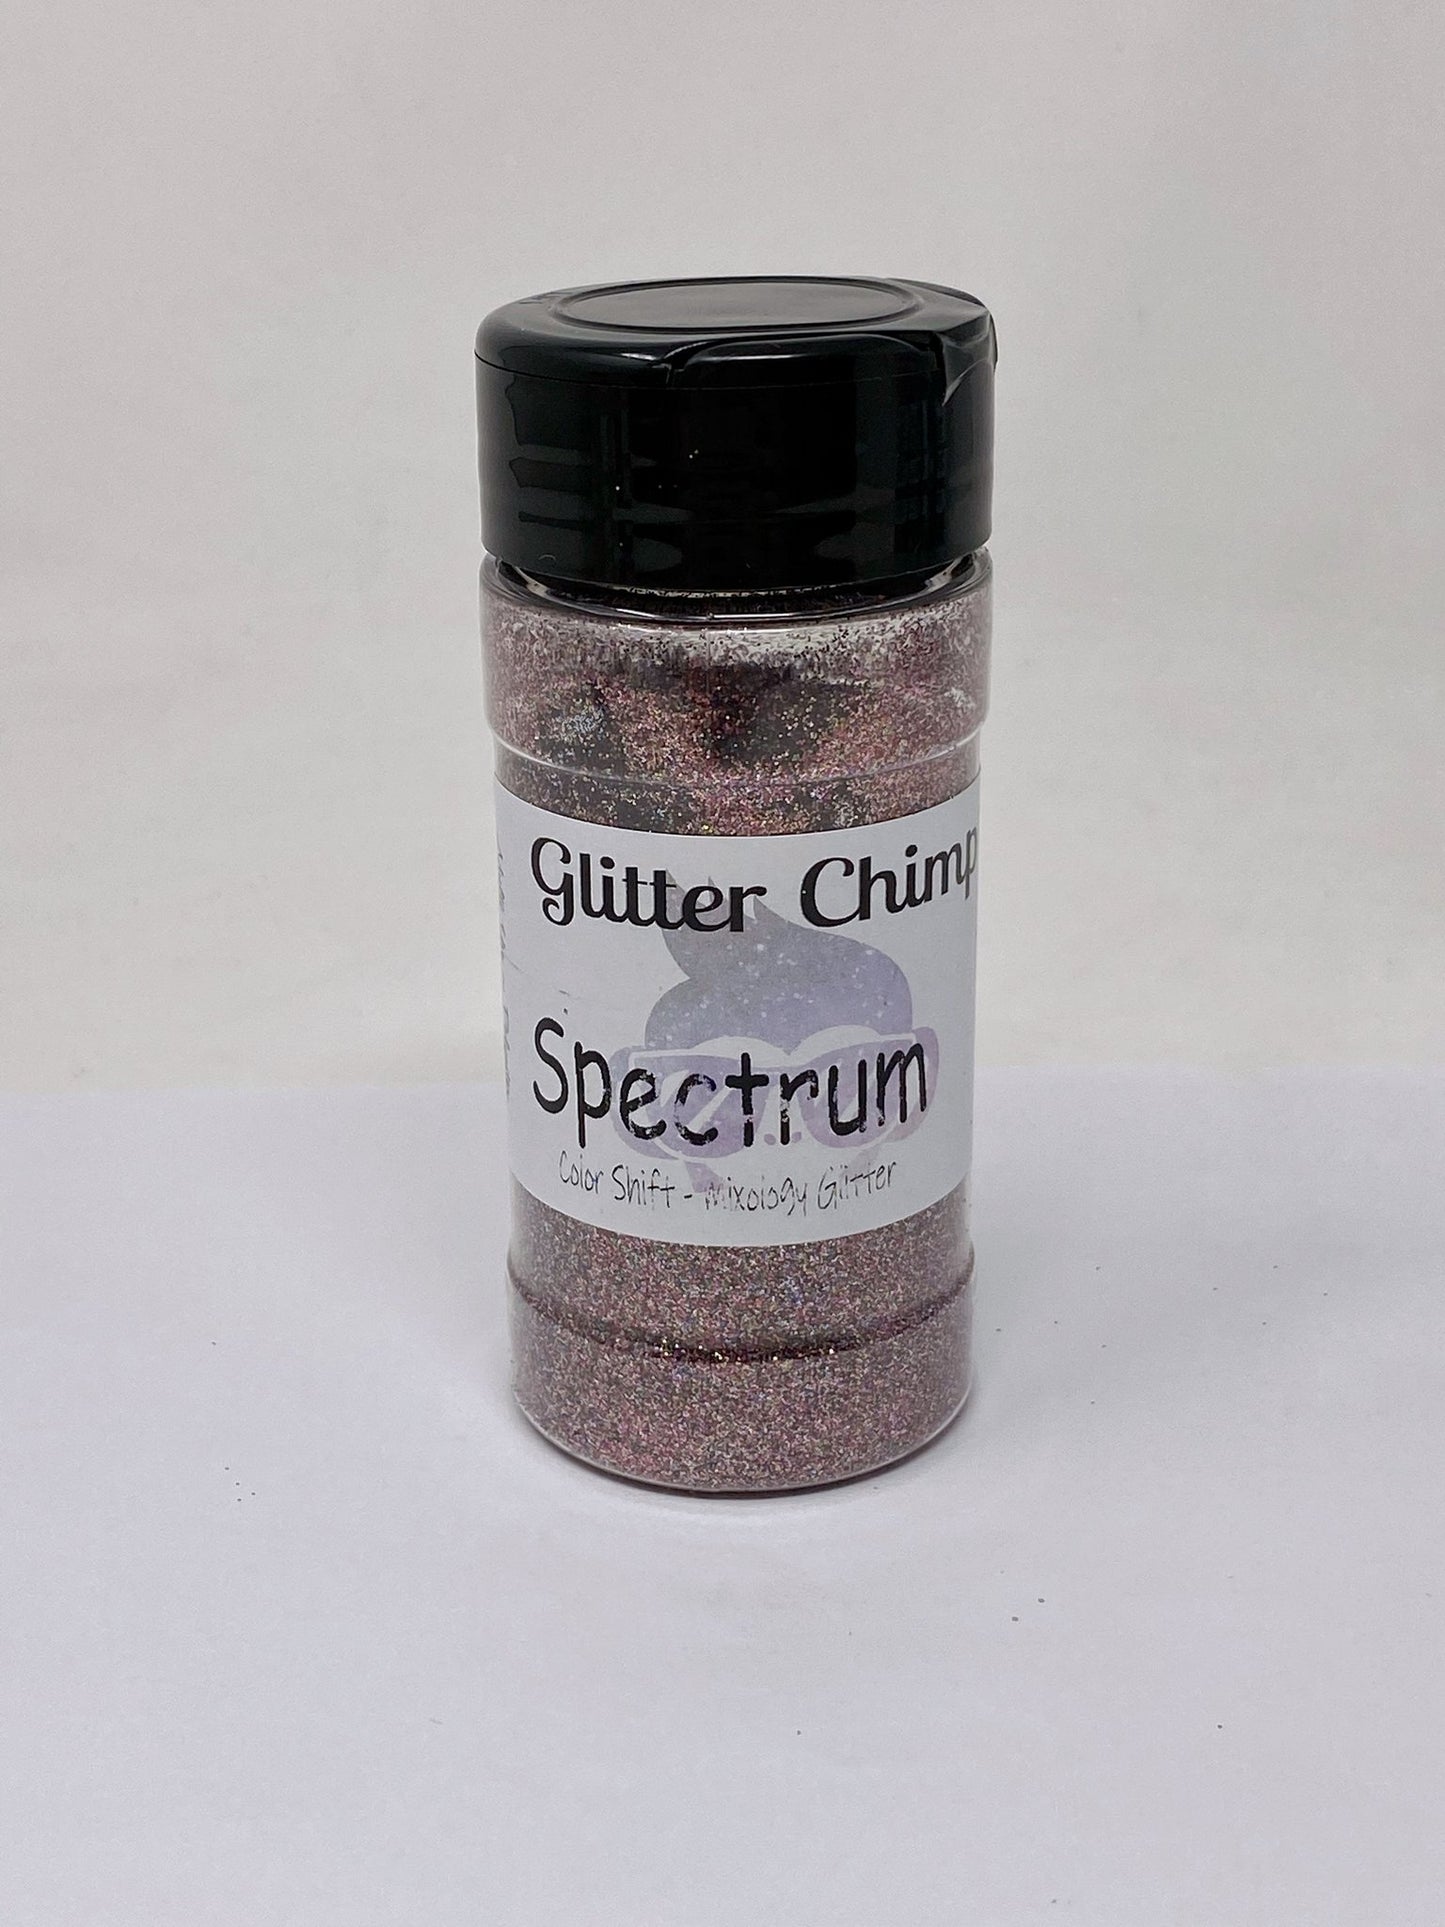 Glitter Chimp  Spectrum Color Shift Mixology Glitter